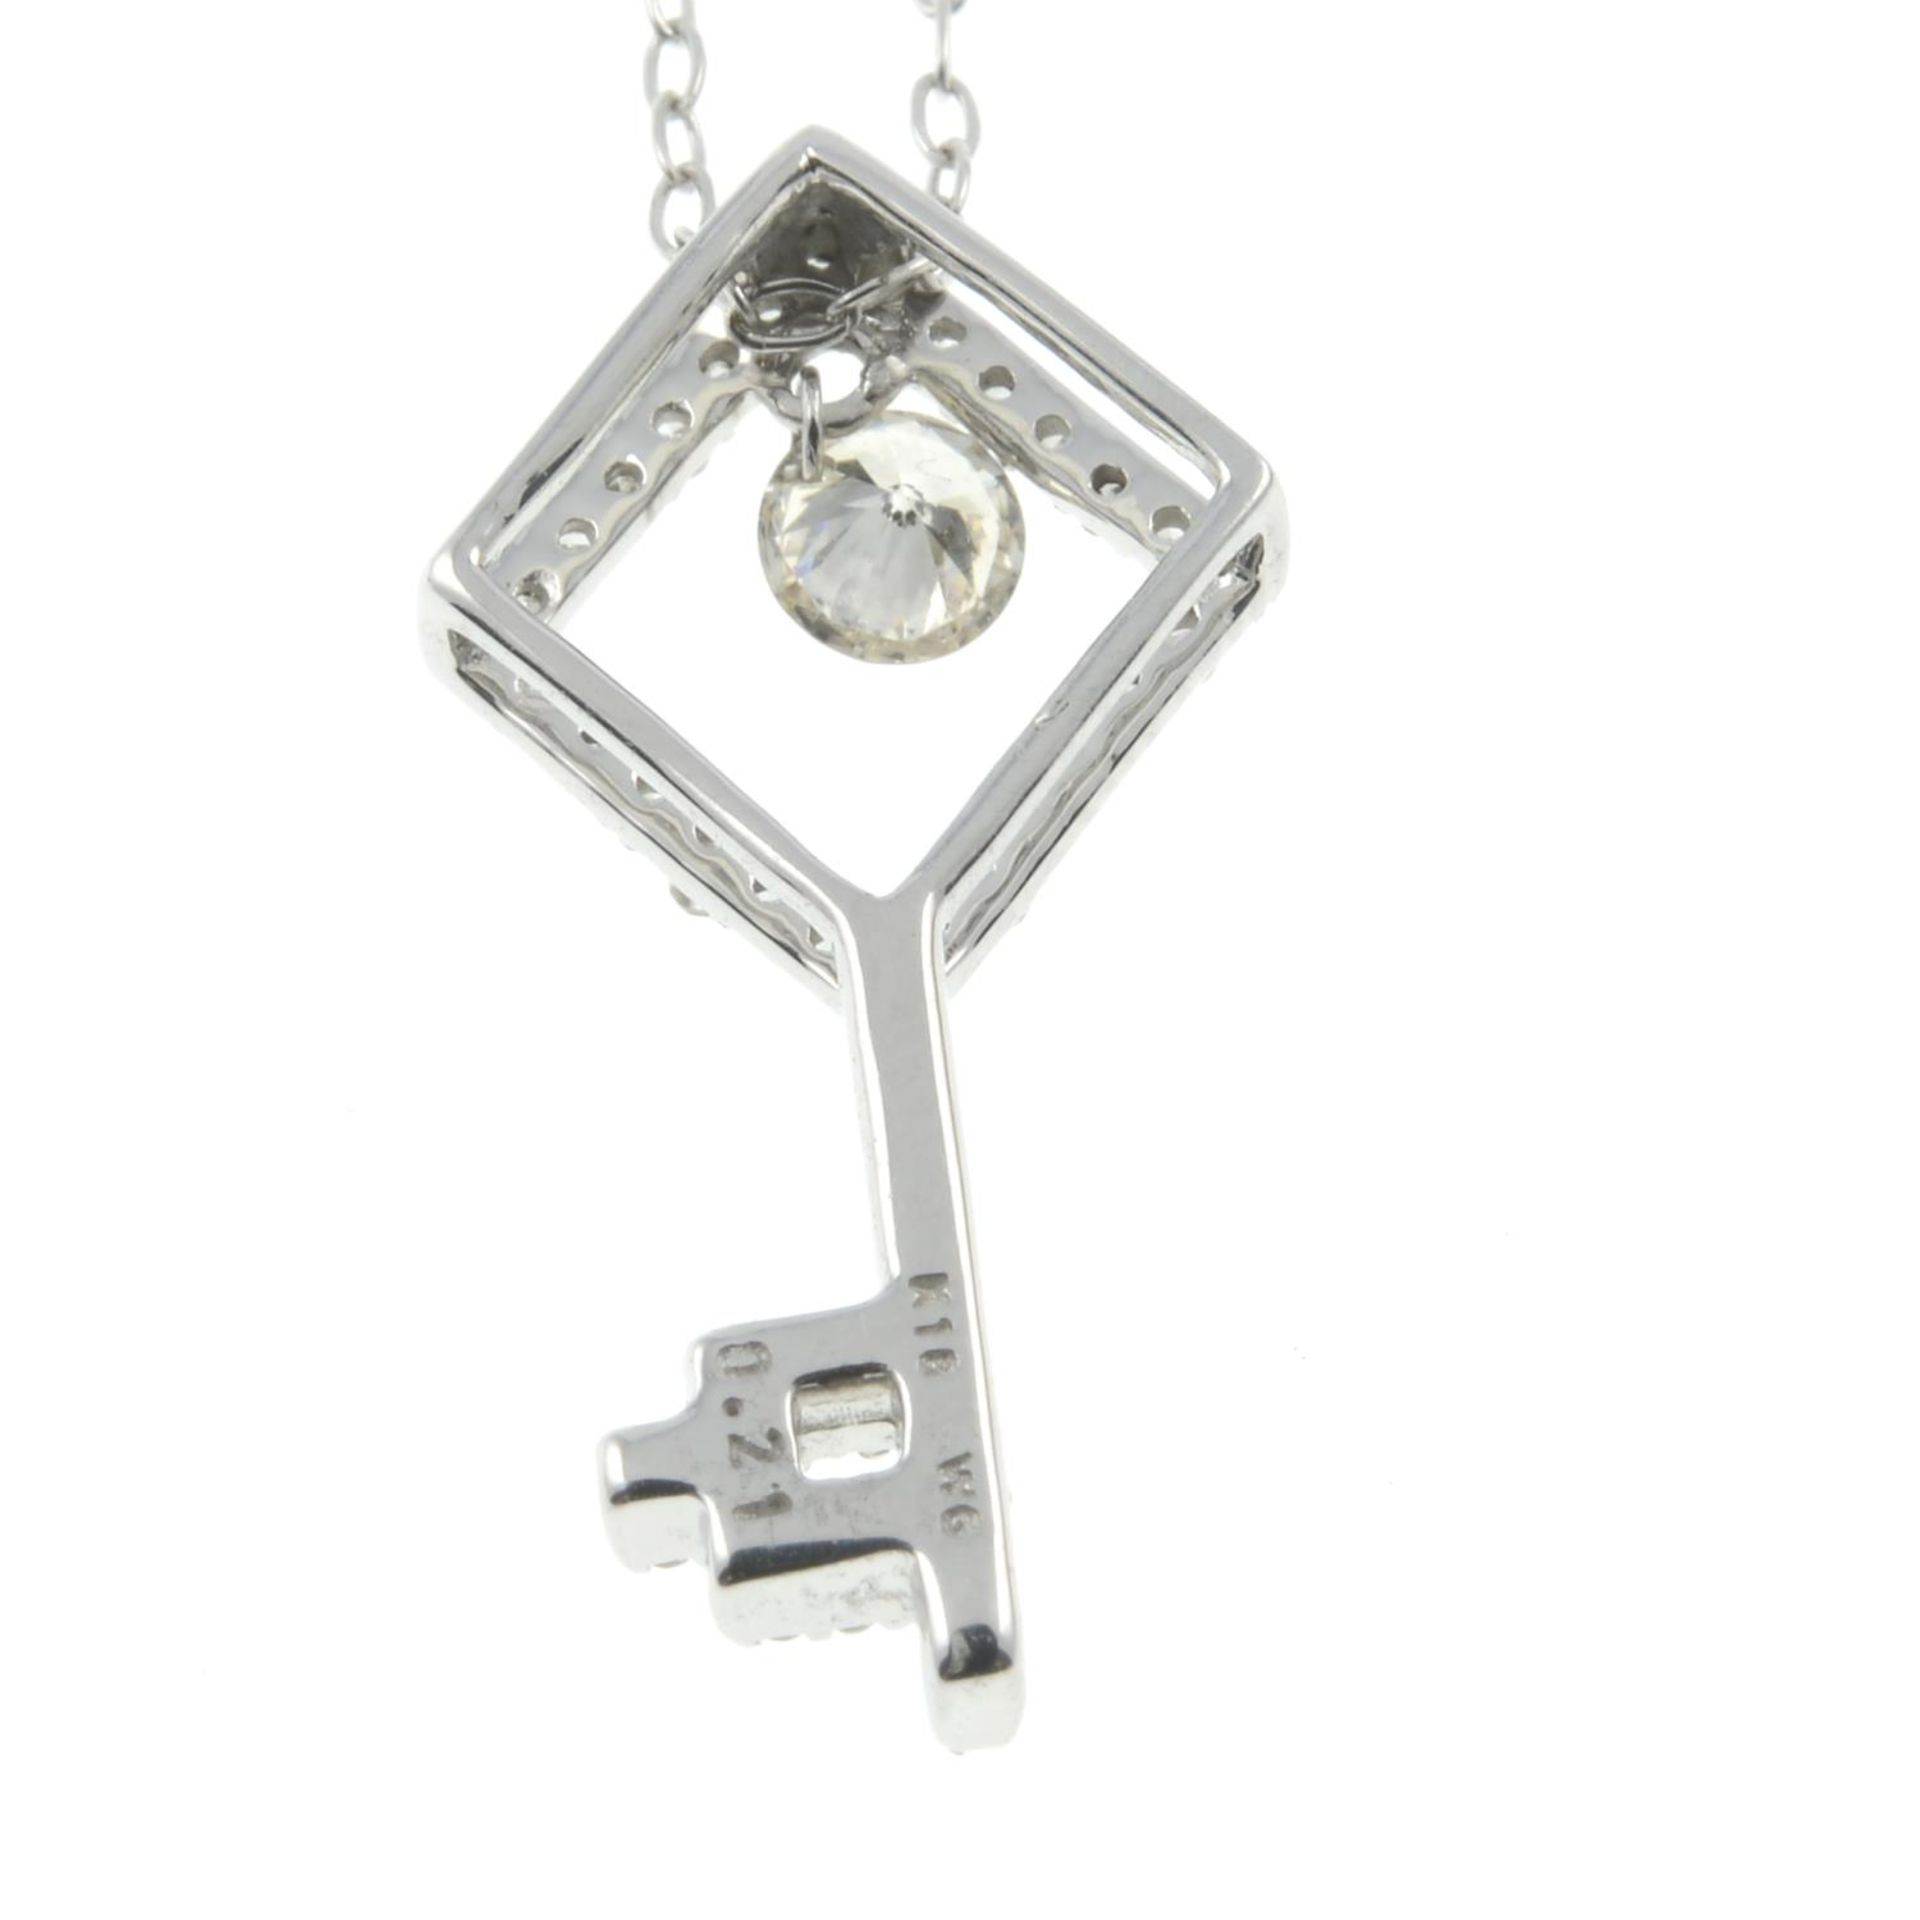 A brilliant-cut diamond key pendant, with chain. - Image 2 of 2